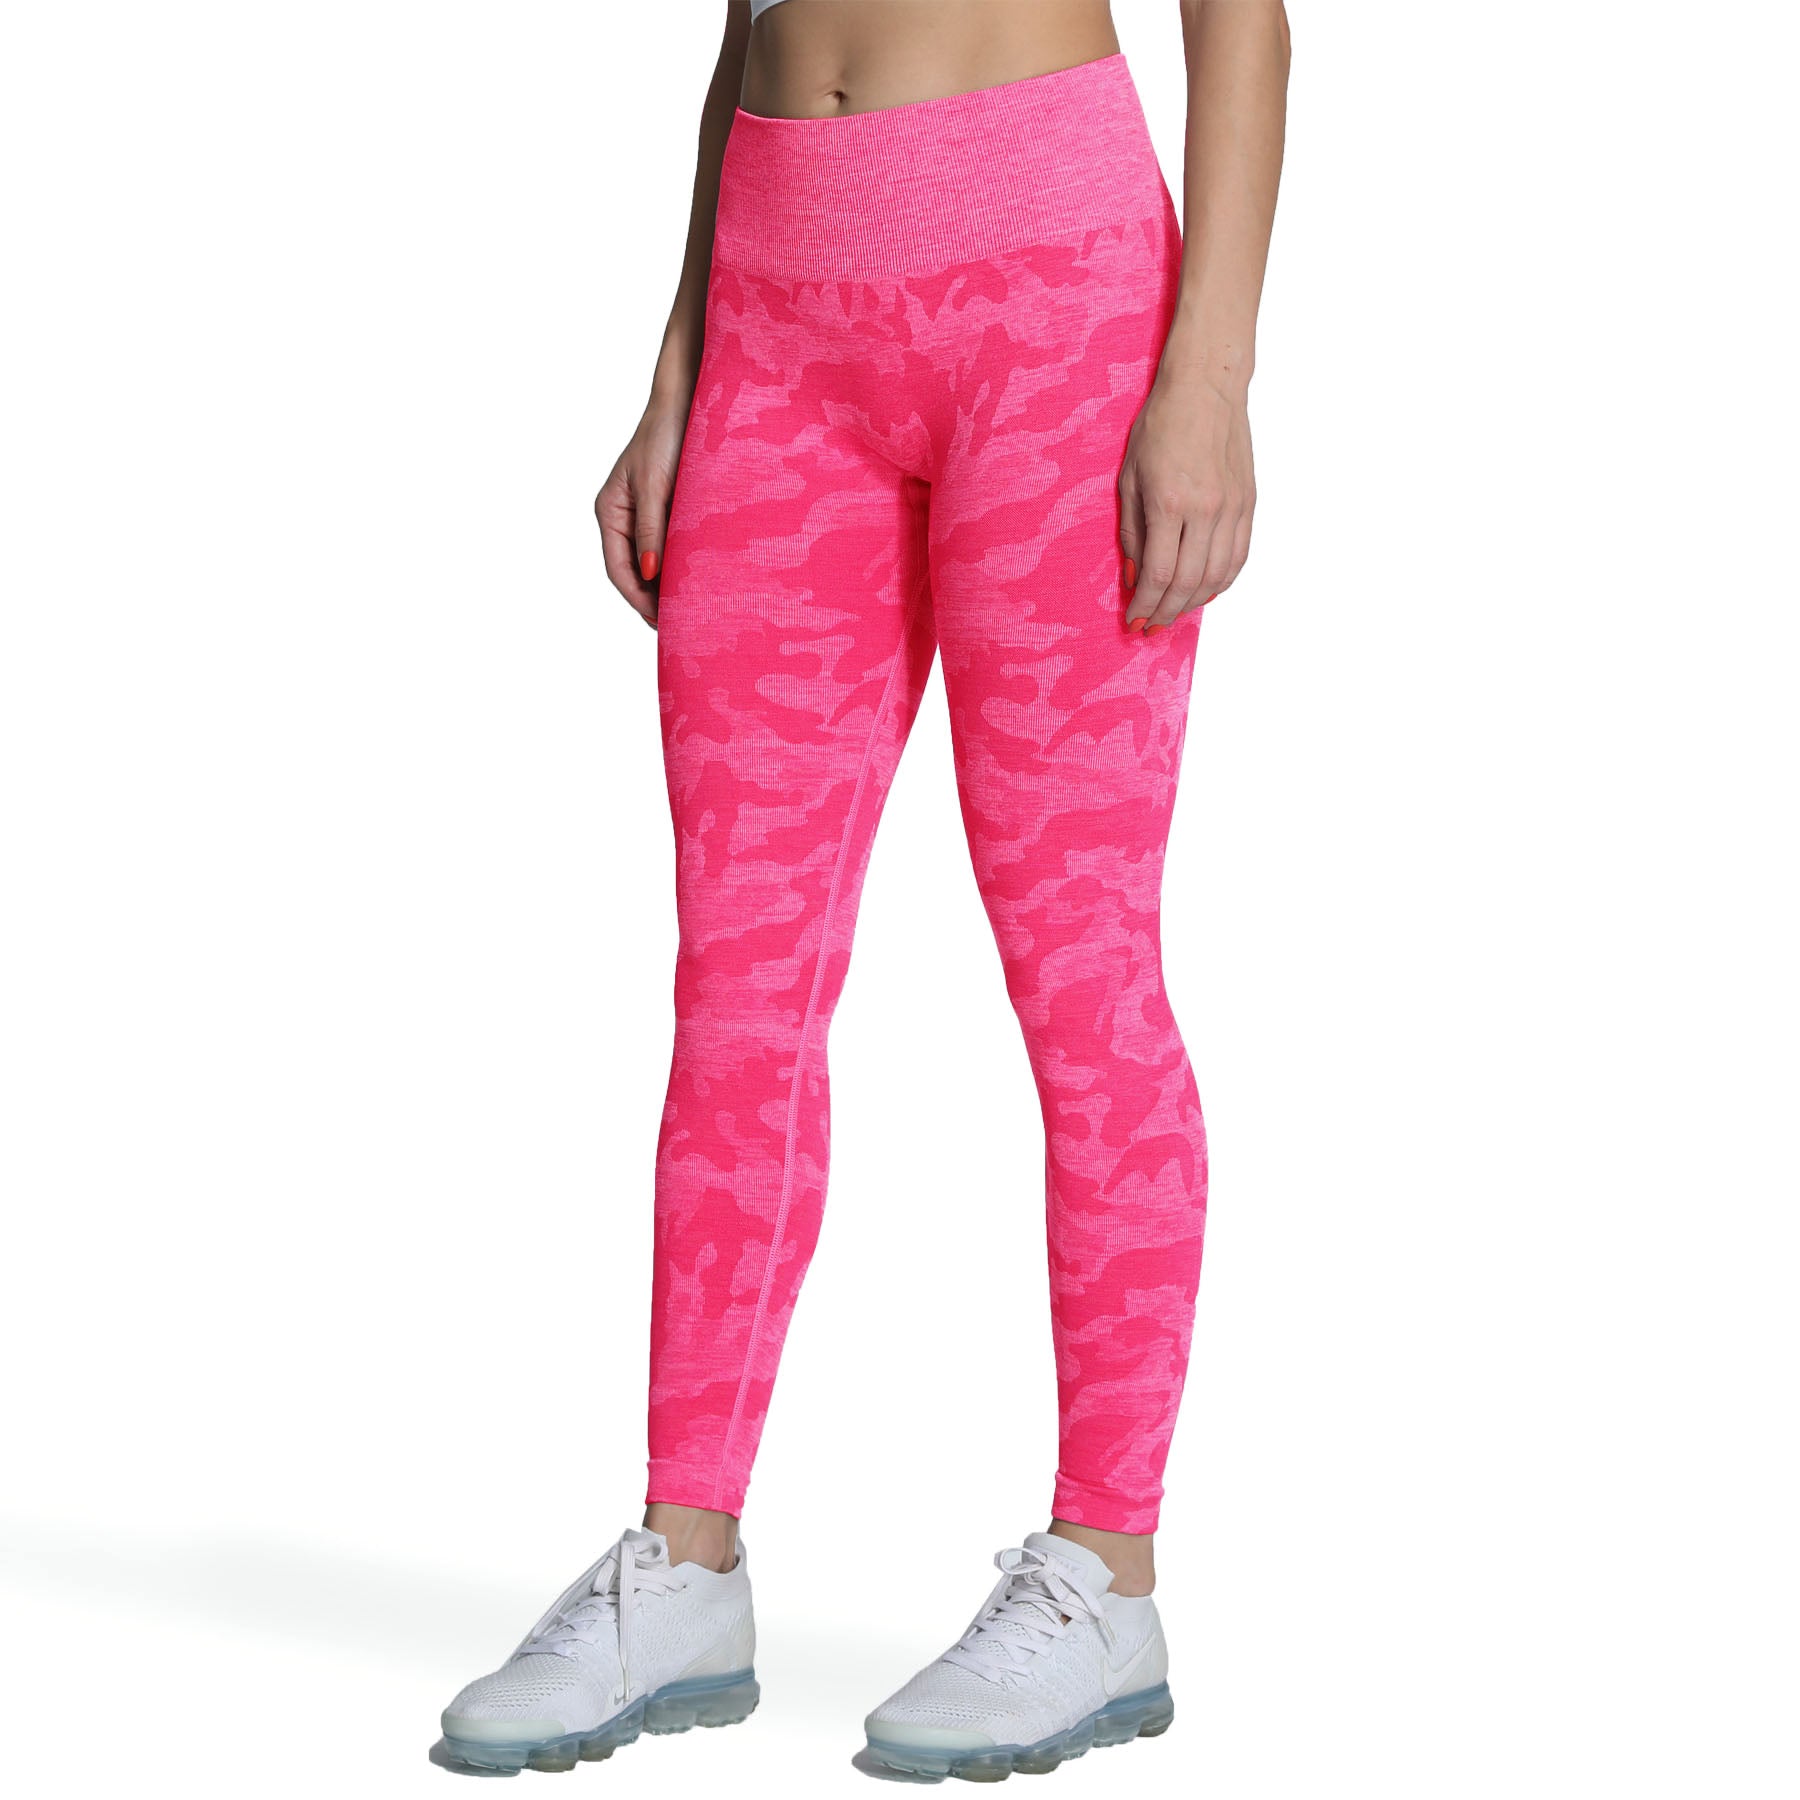 Desert Camo Leggings - Pink Leisurewear